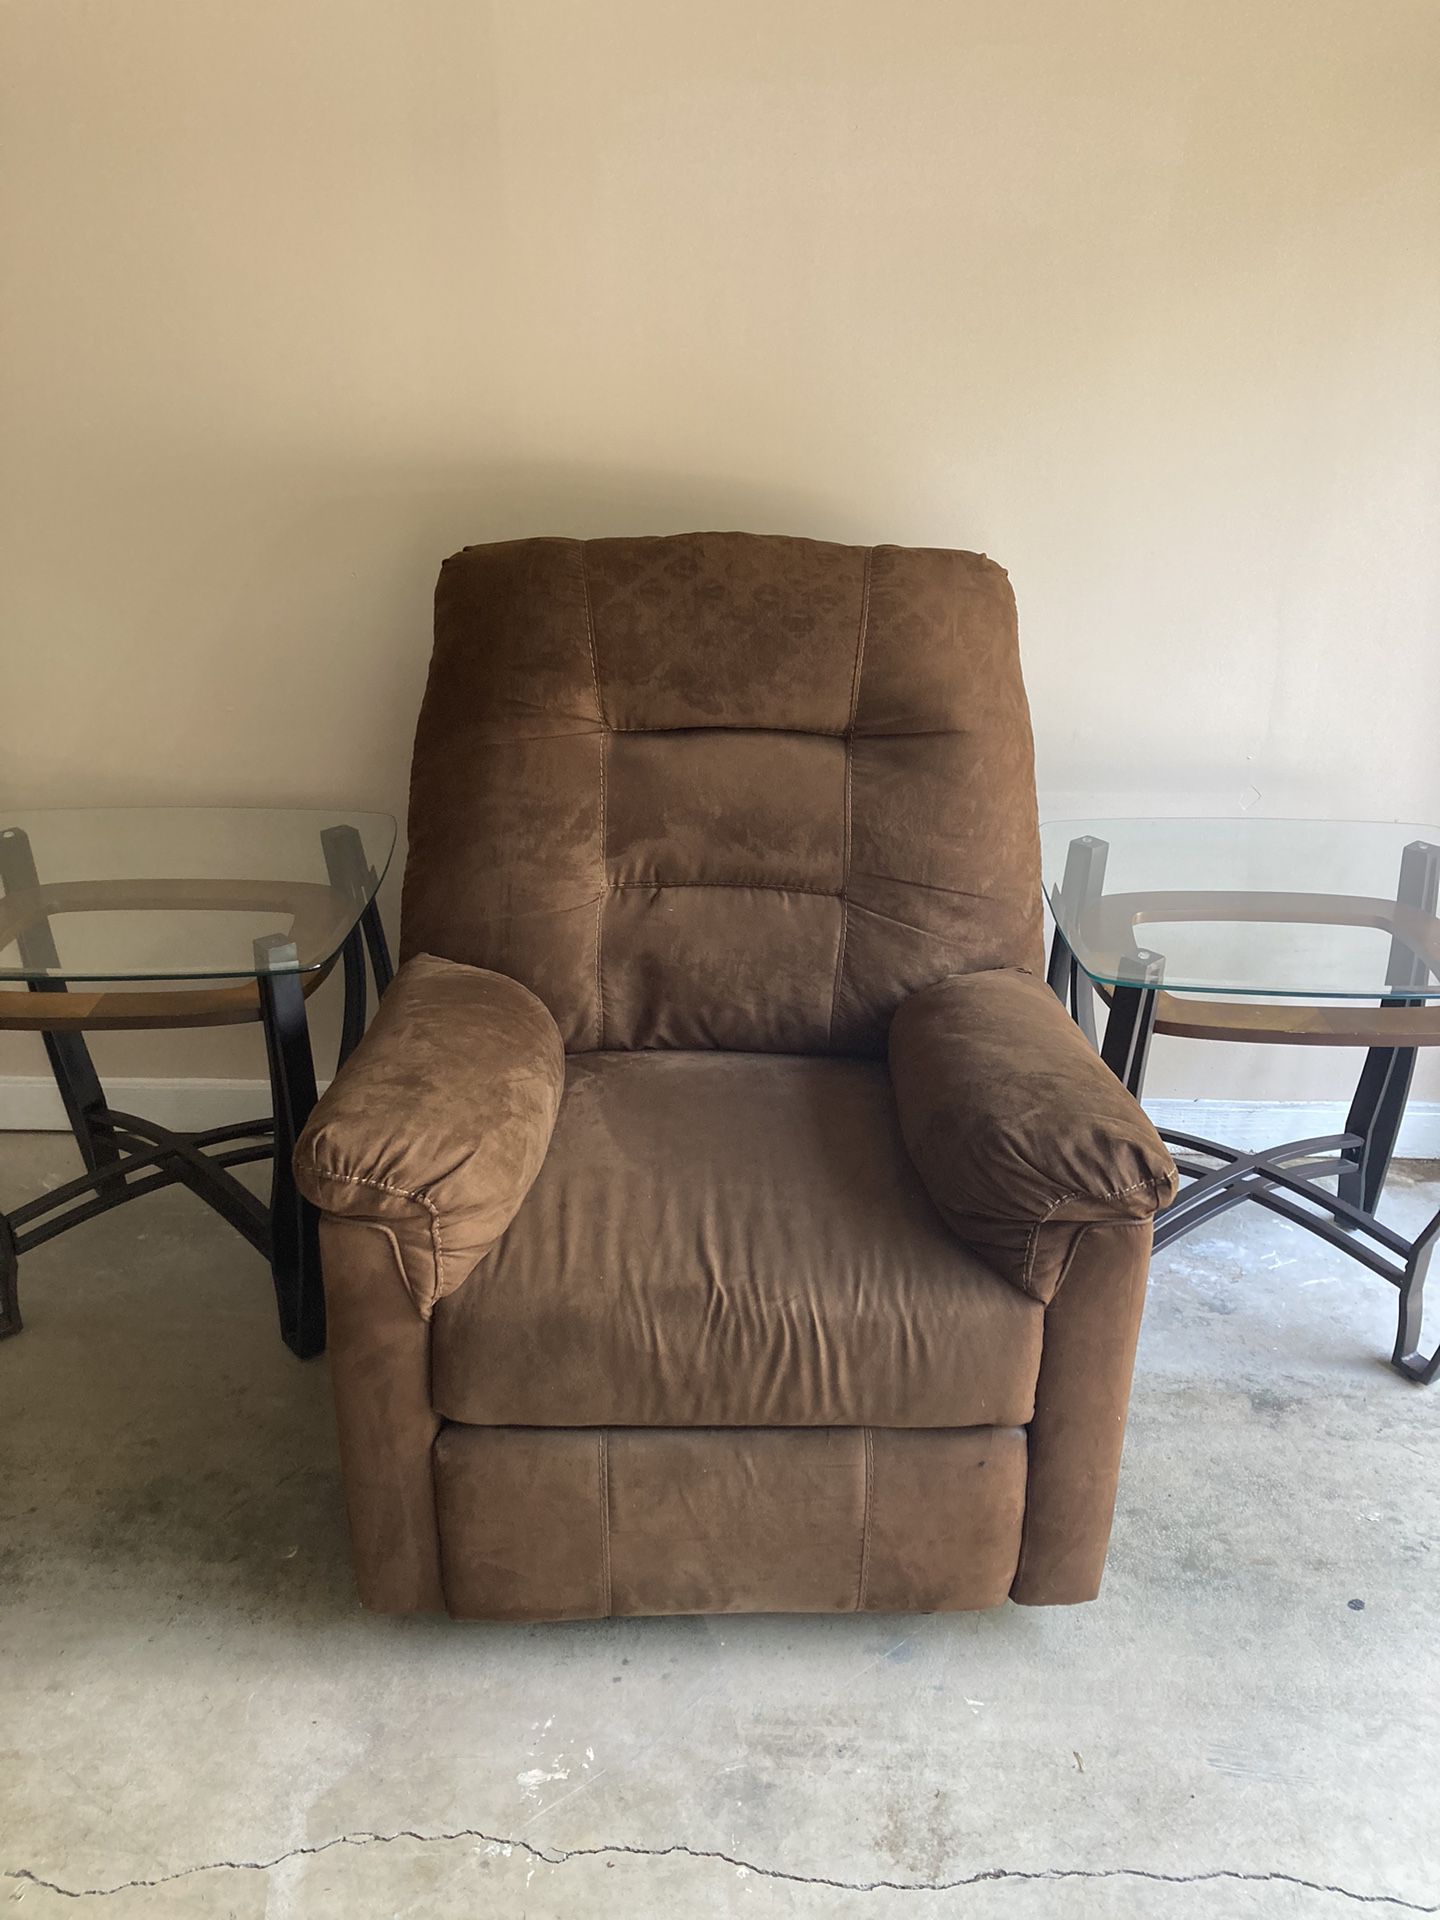 Comfy Full Recliner Chair 